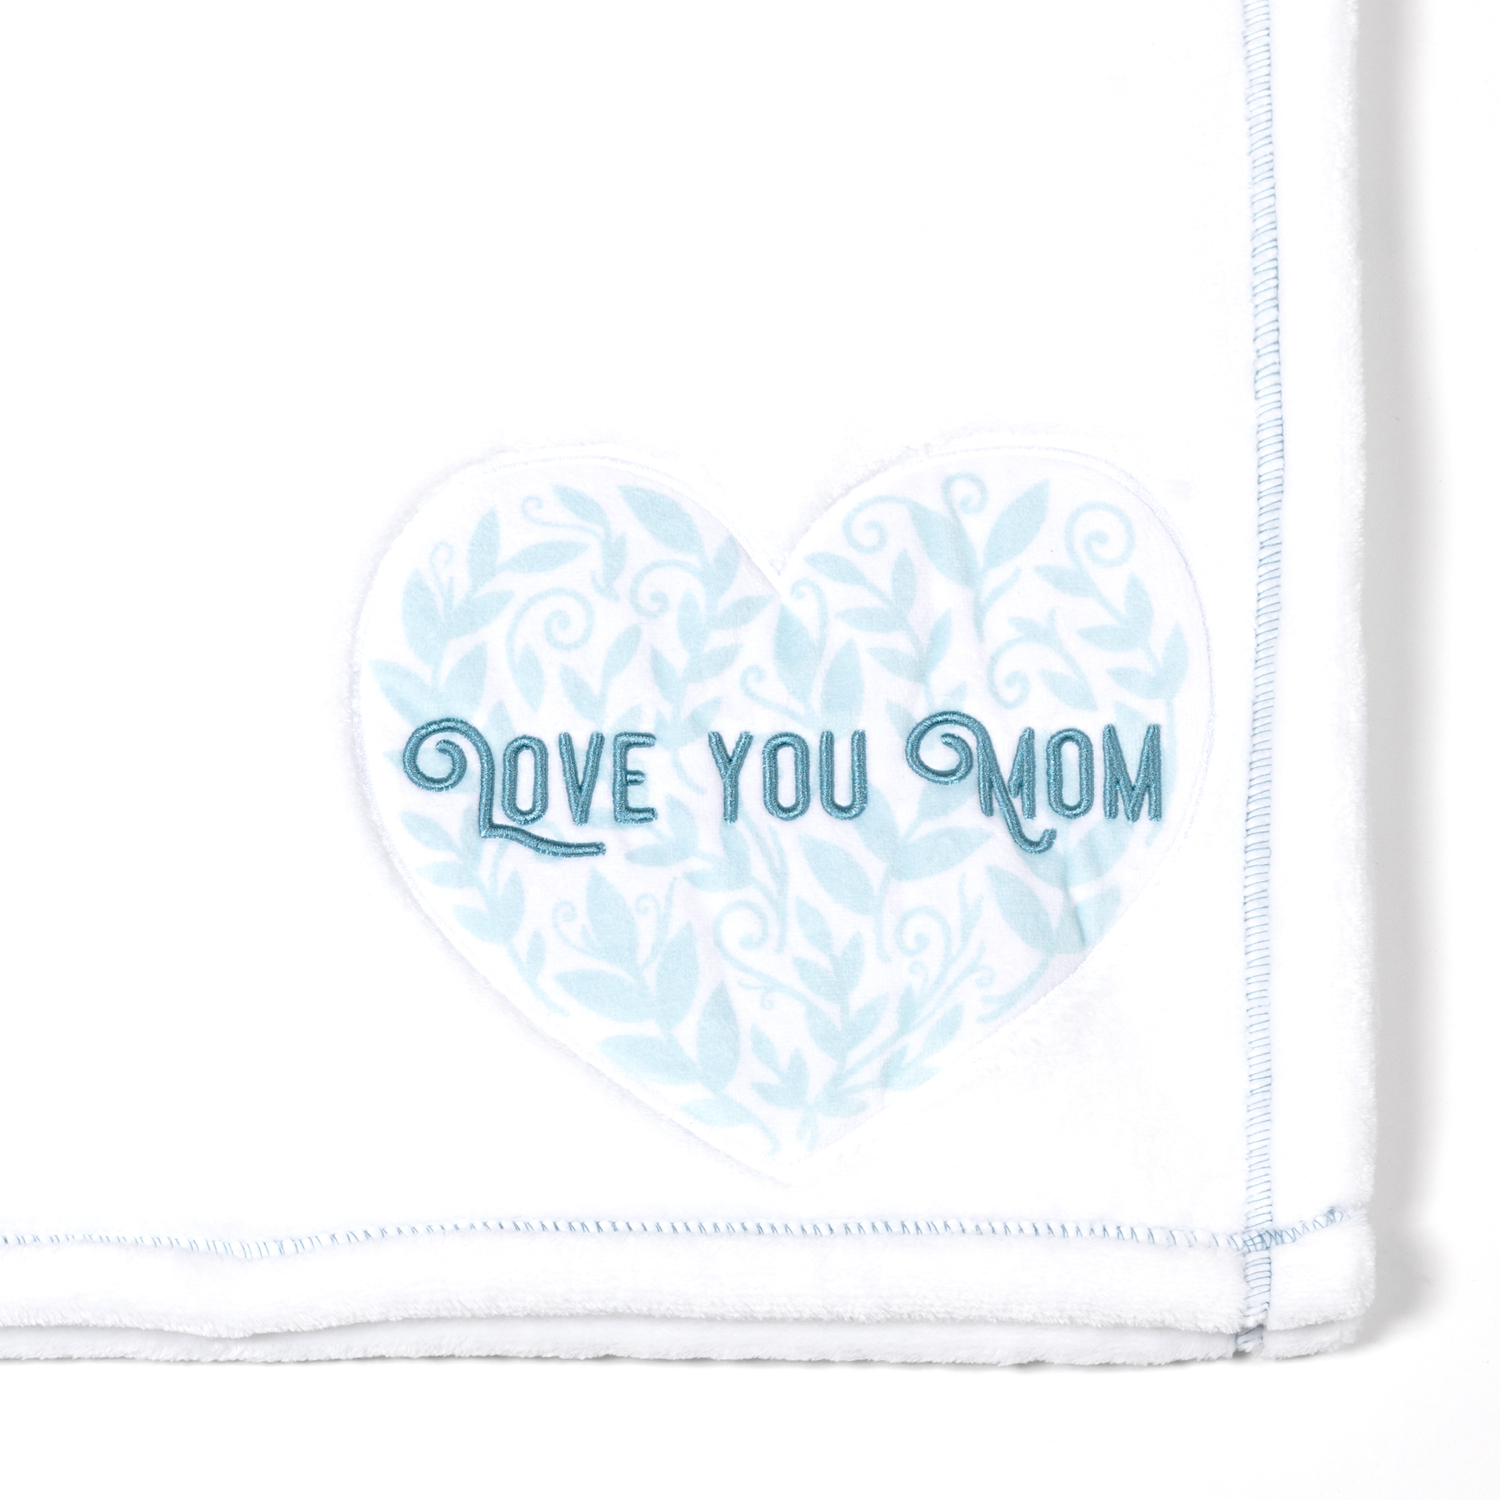 Mom - Vines by Comfort Blanket - Mom - Vines - 50" x 60" Royal Plush Blanket